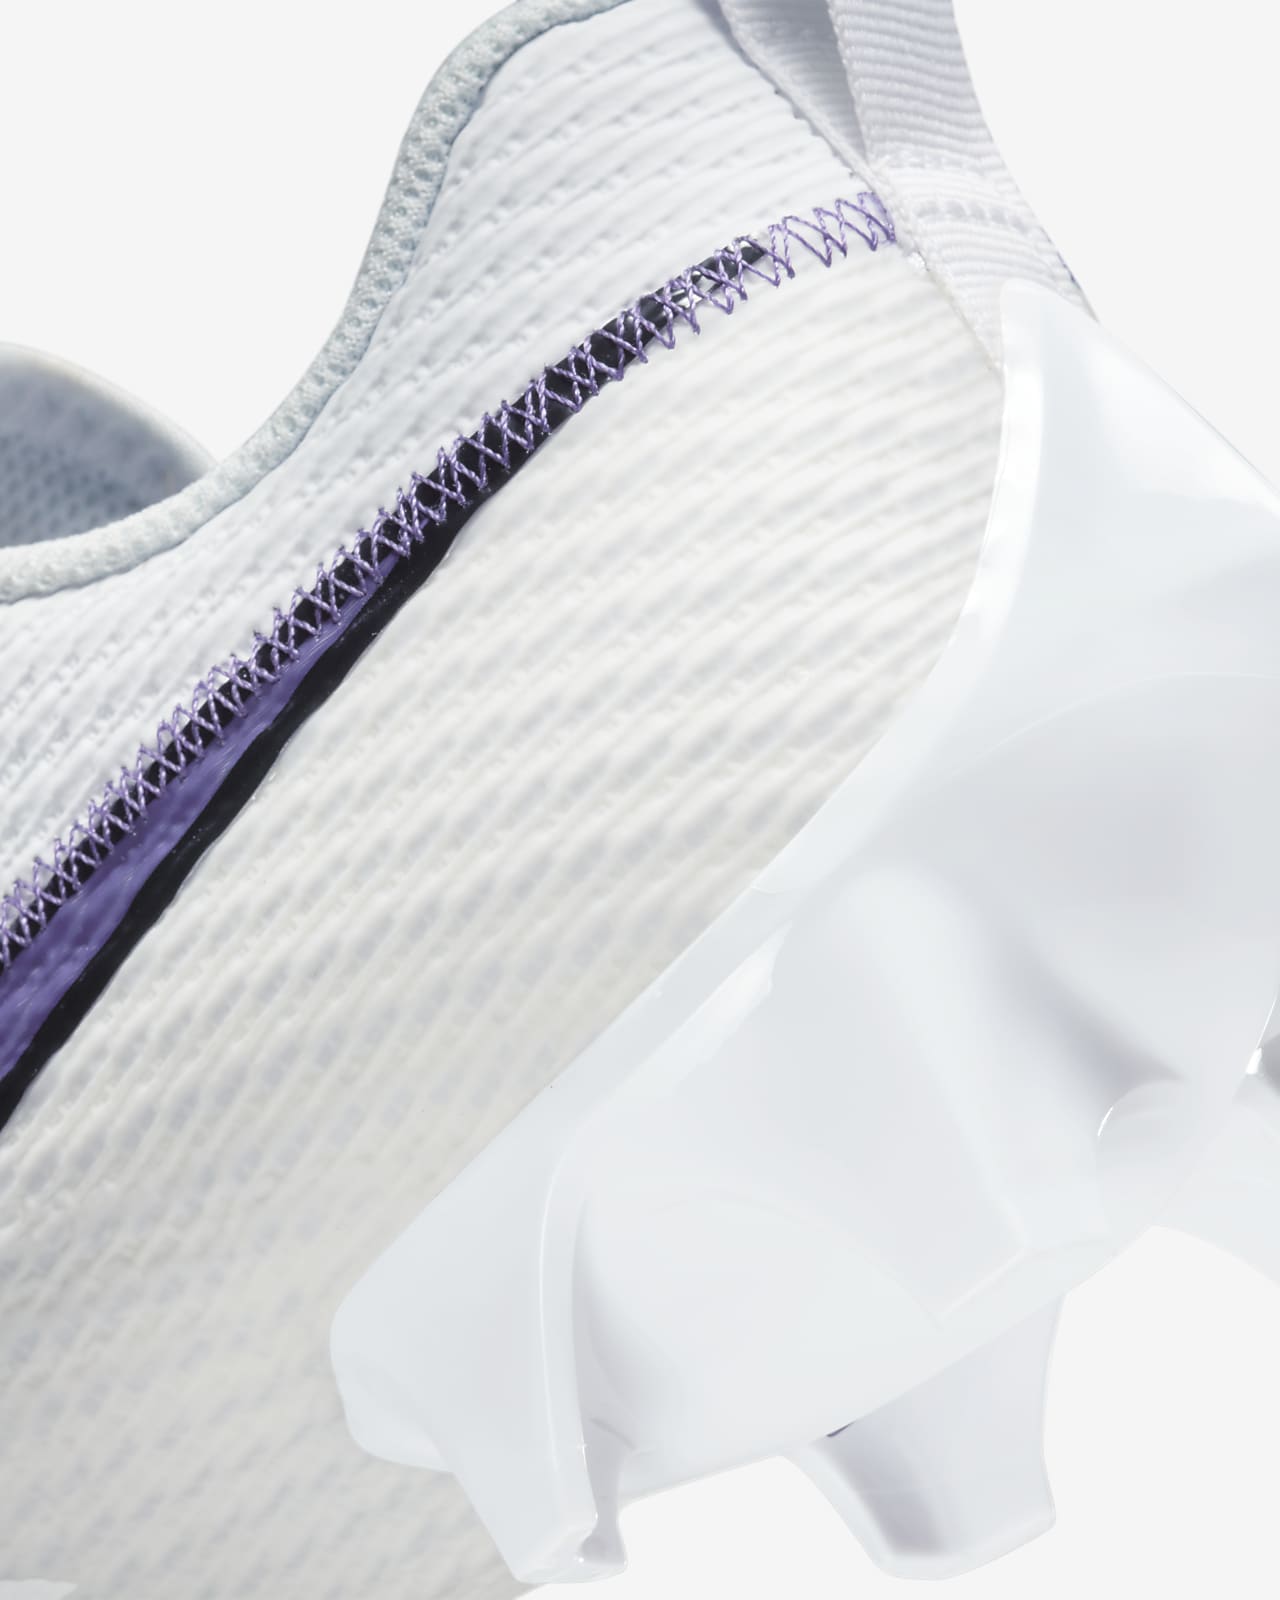  Nike Vapor Edge Elite 360 2 Men's Football Cleats | Shoes